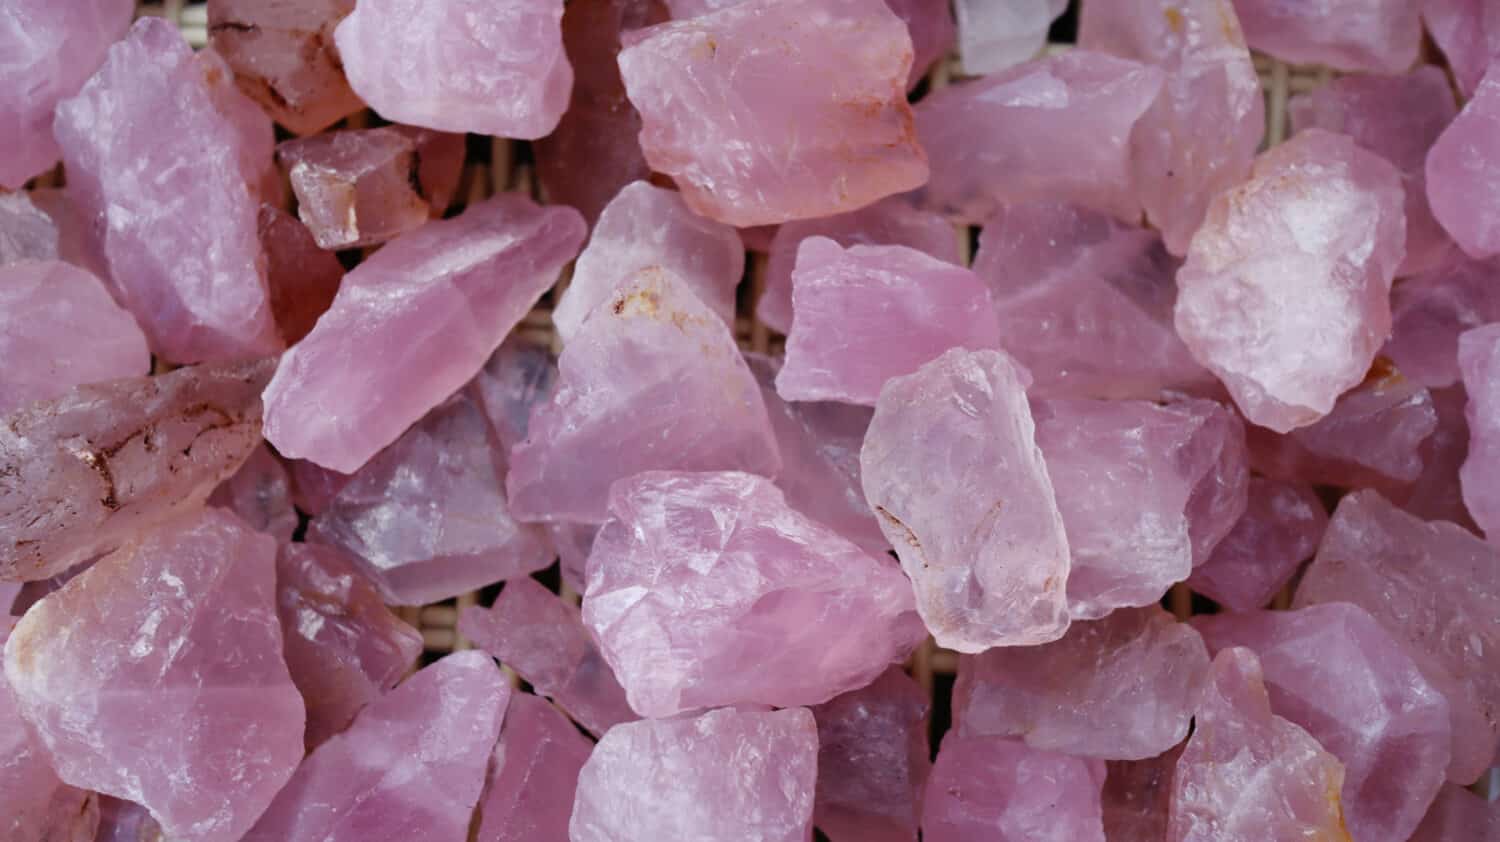 The group of rose quartz stone